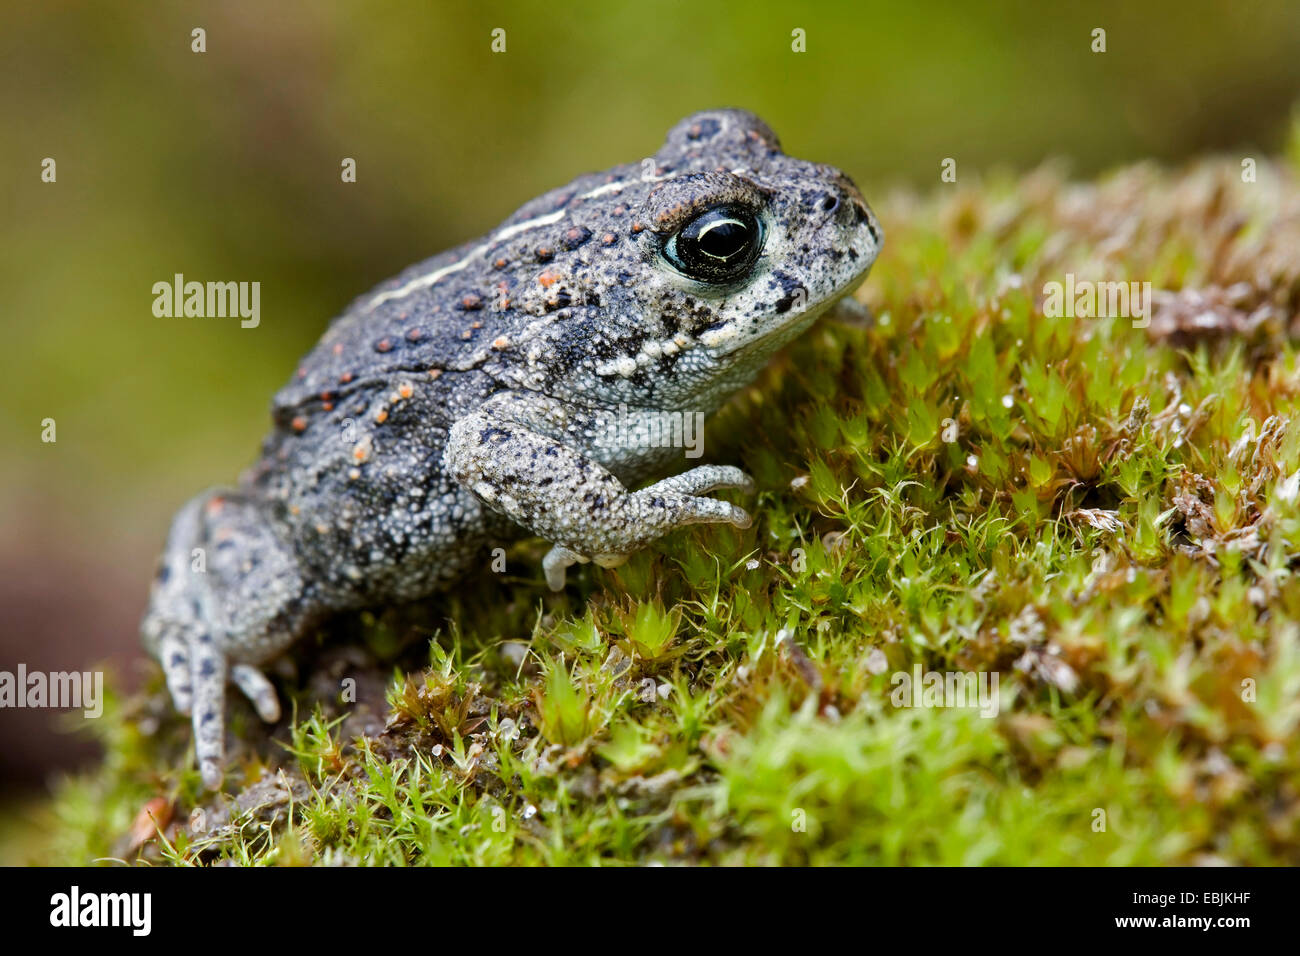 natterjack toad, natterjack, British toad (Bufo calamita), juvenile on moss, Denmark, Jylland Stock Photo